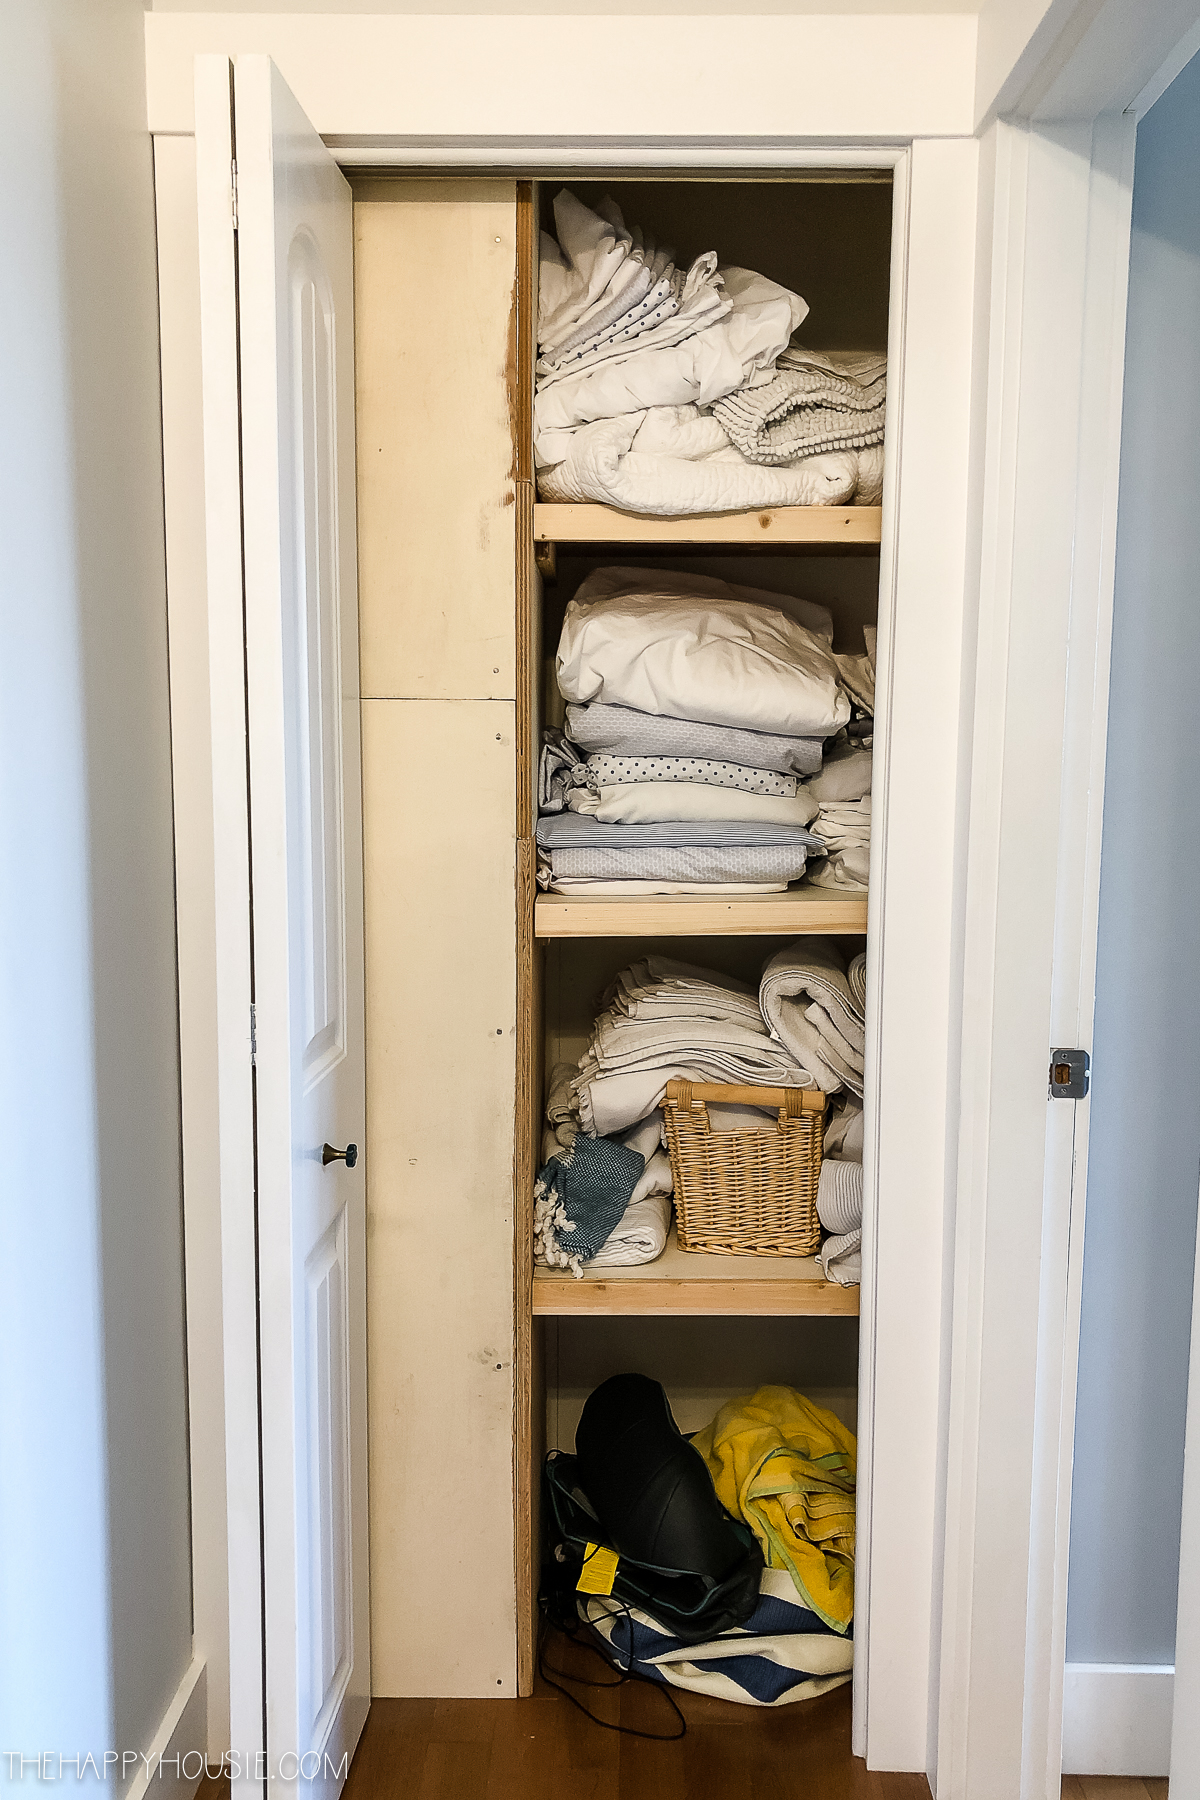 A disorganized linen closet.